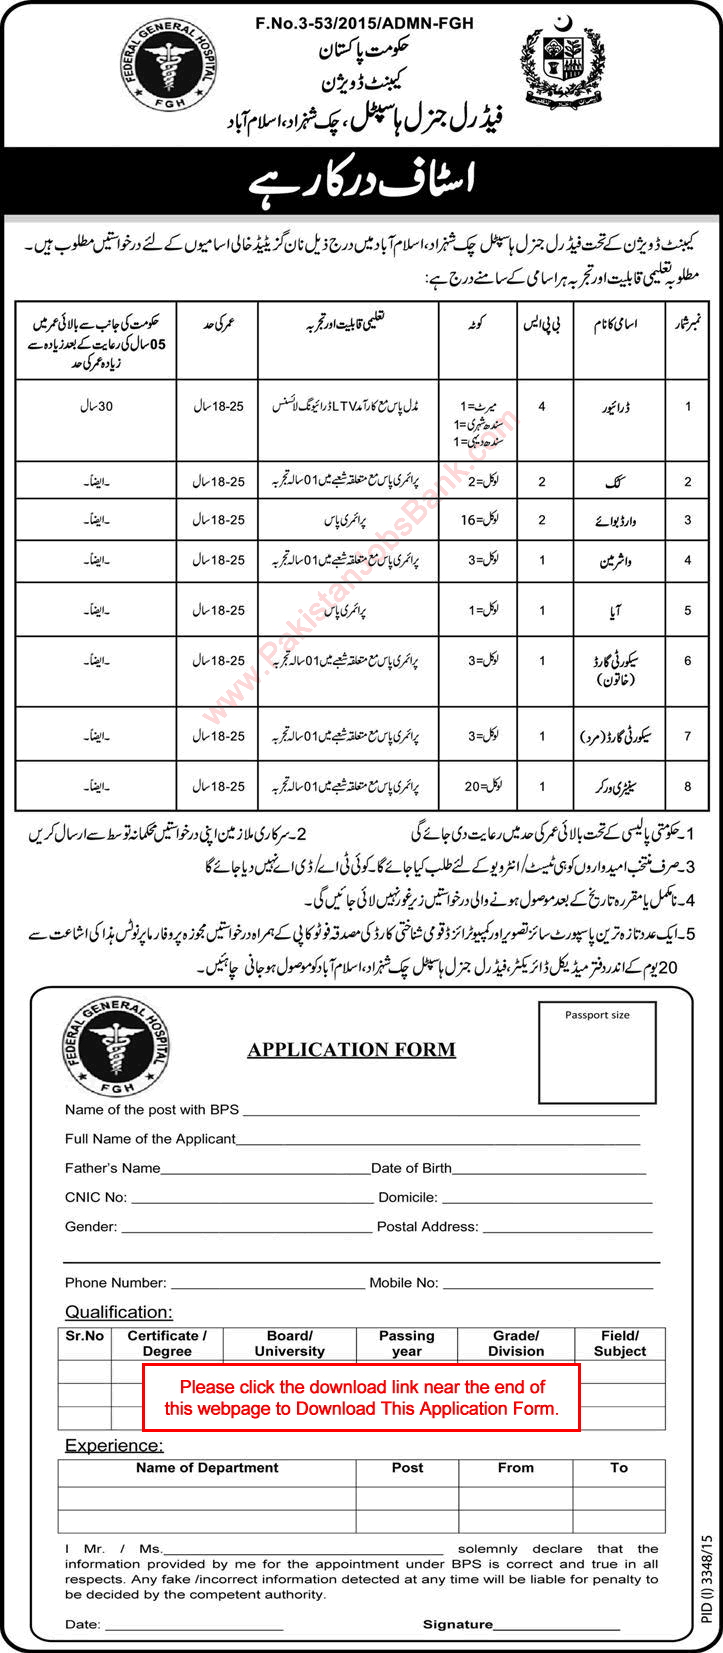 Federal General Hospital Islamabad Jobs 2016 Application Form Chak Shahzad Latest